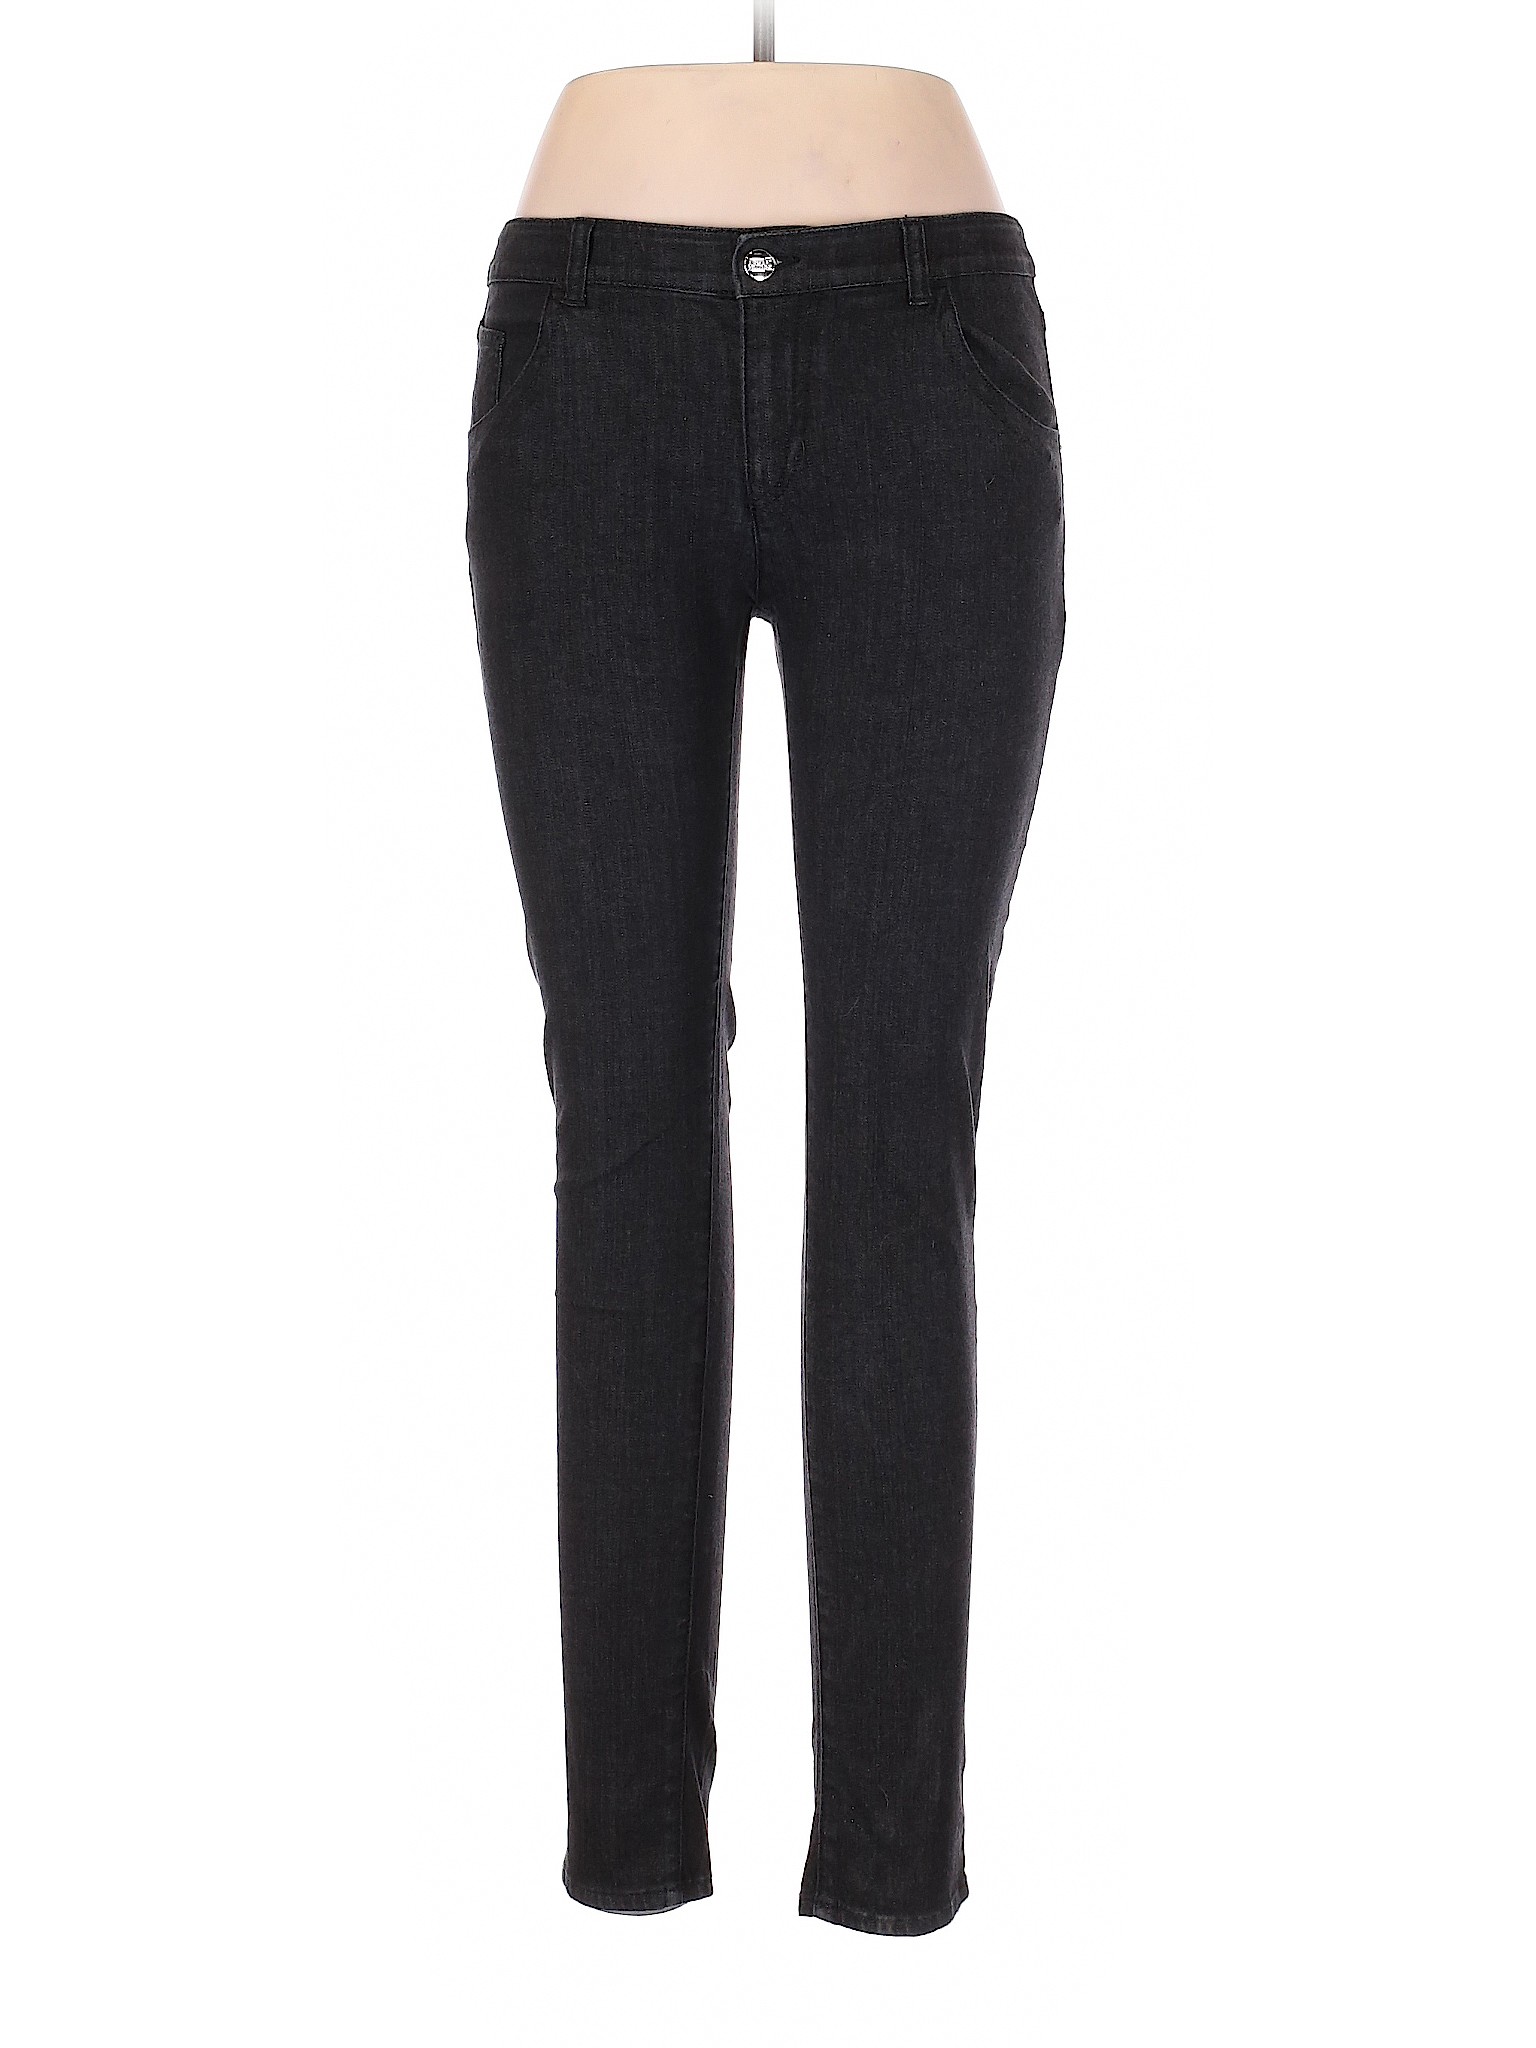 Armani Collezioni Black Jeans 30 Waist - 86% off | thredUP